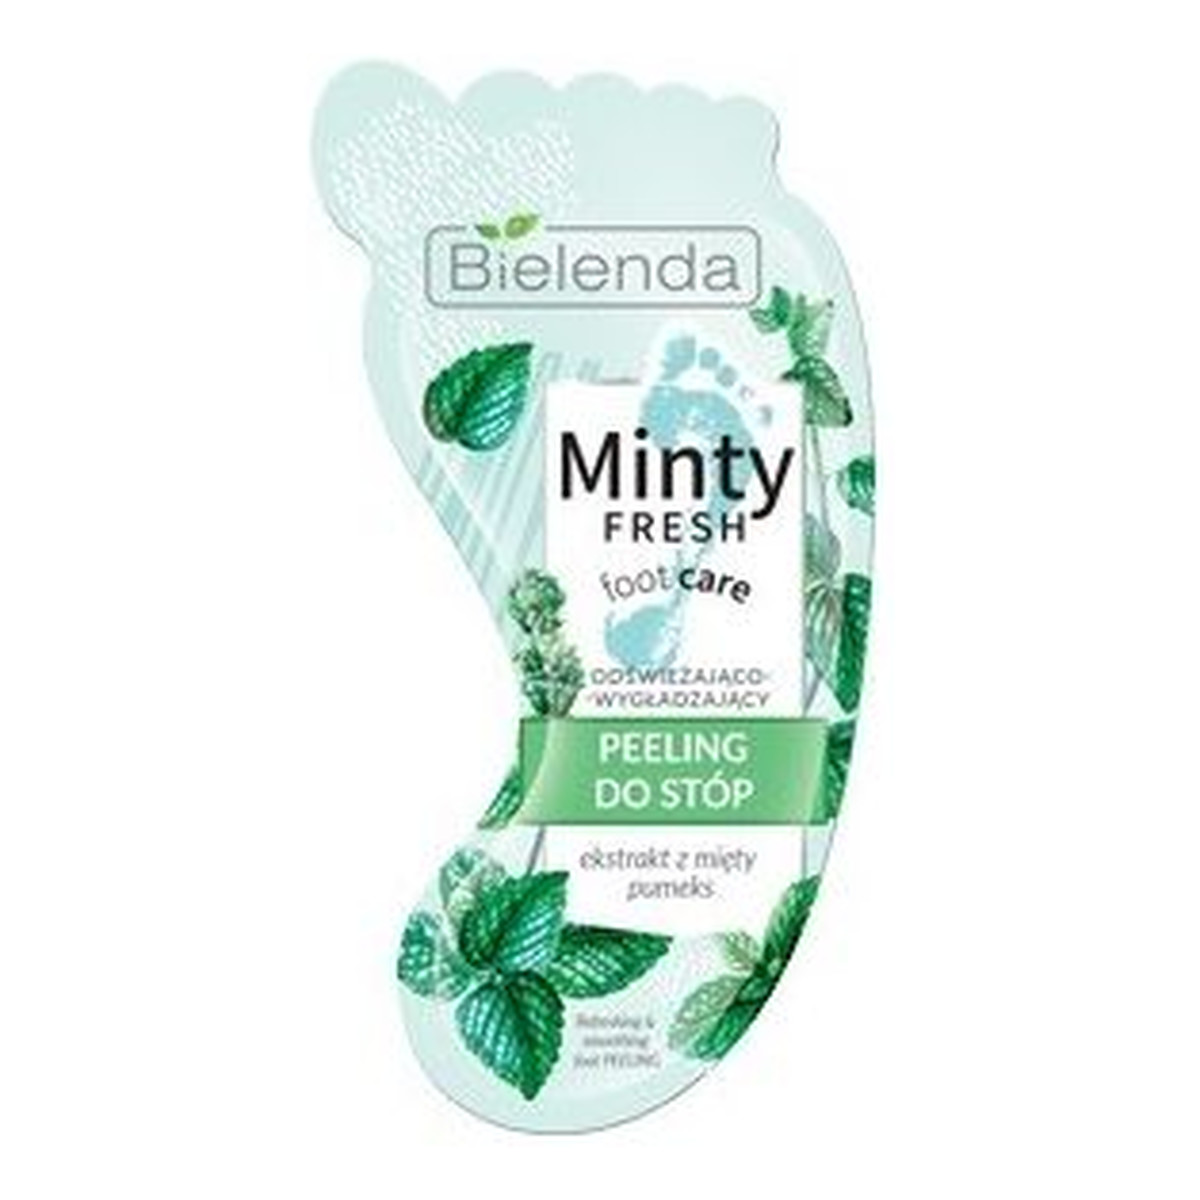 Bielenda MINTY FRESH Foot Care Peeling 10g